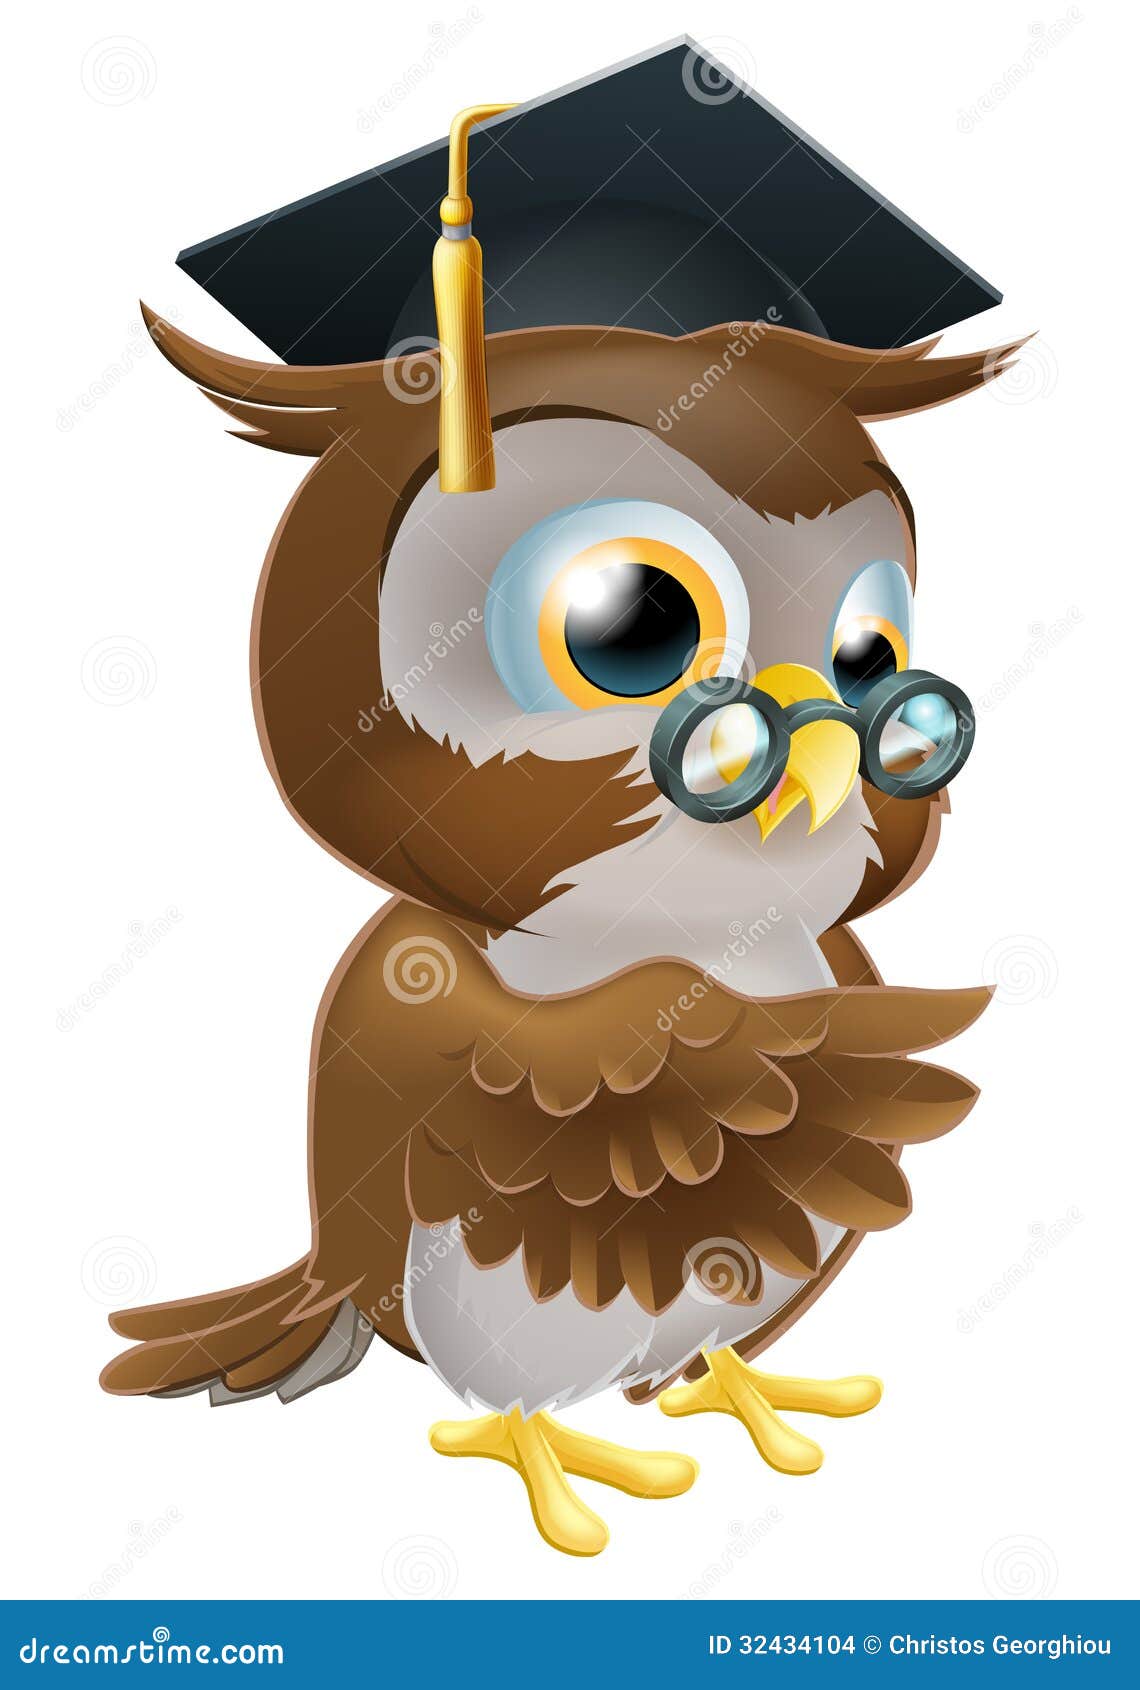 owl professor clipart - photo #10